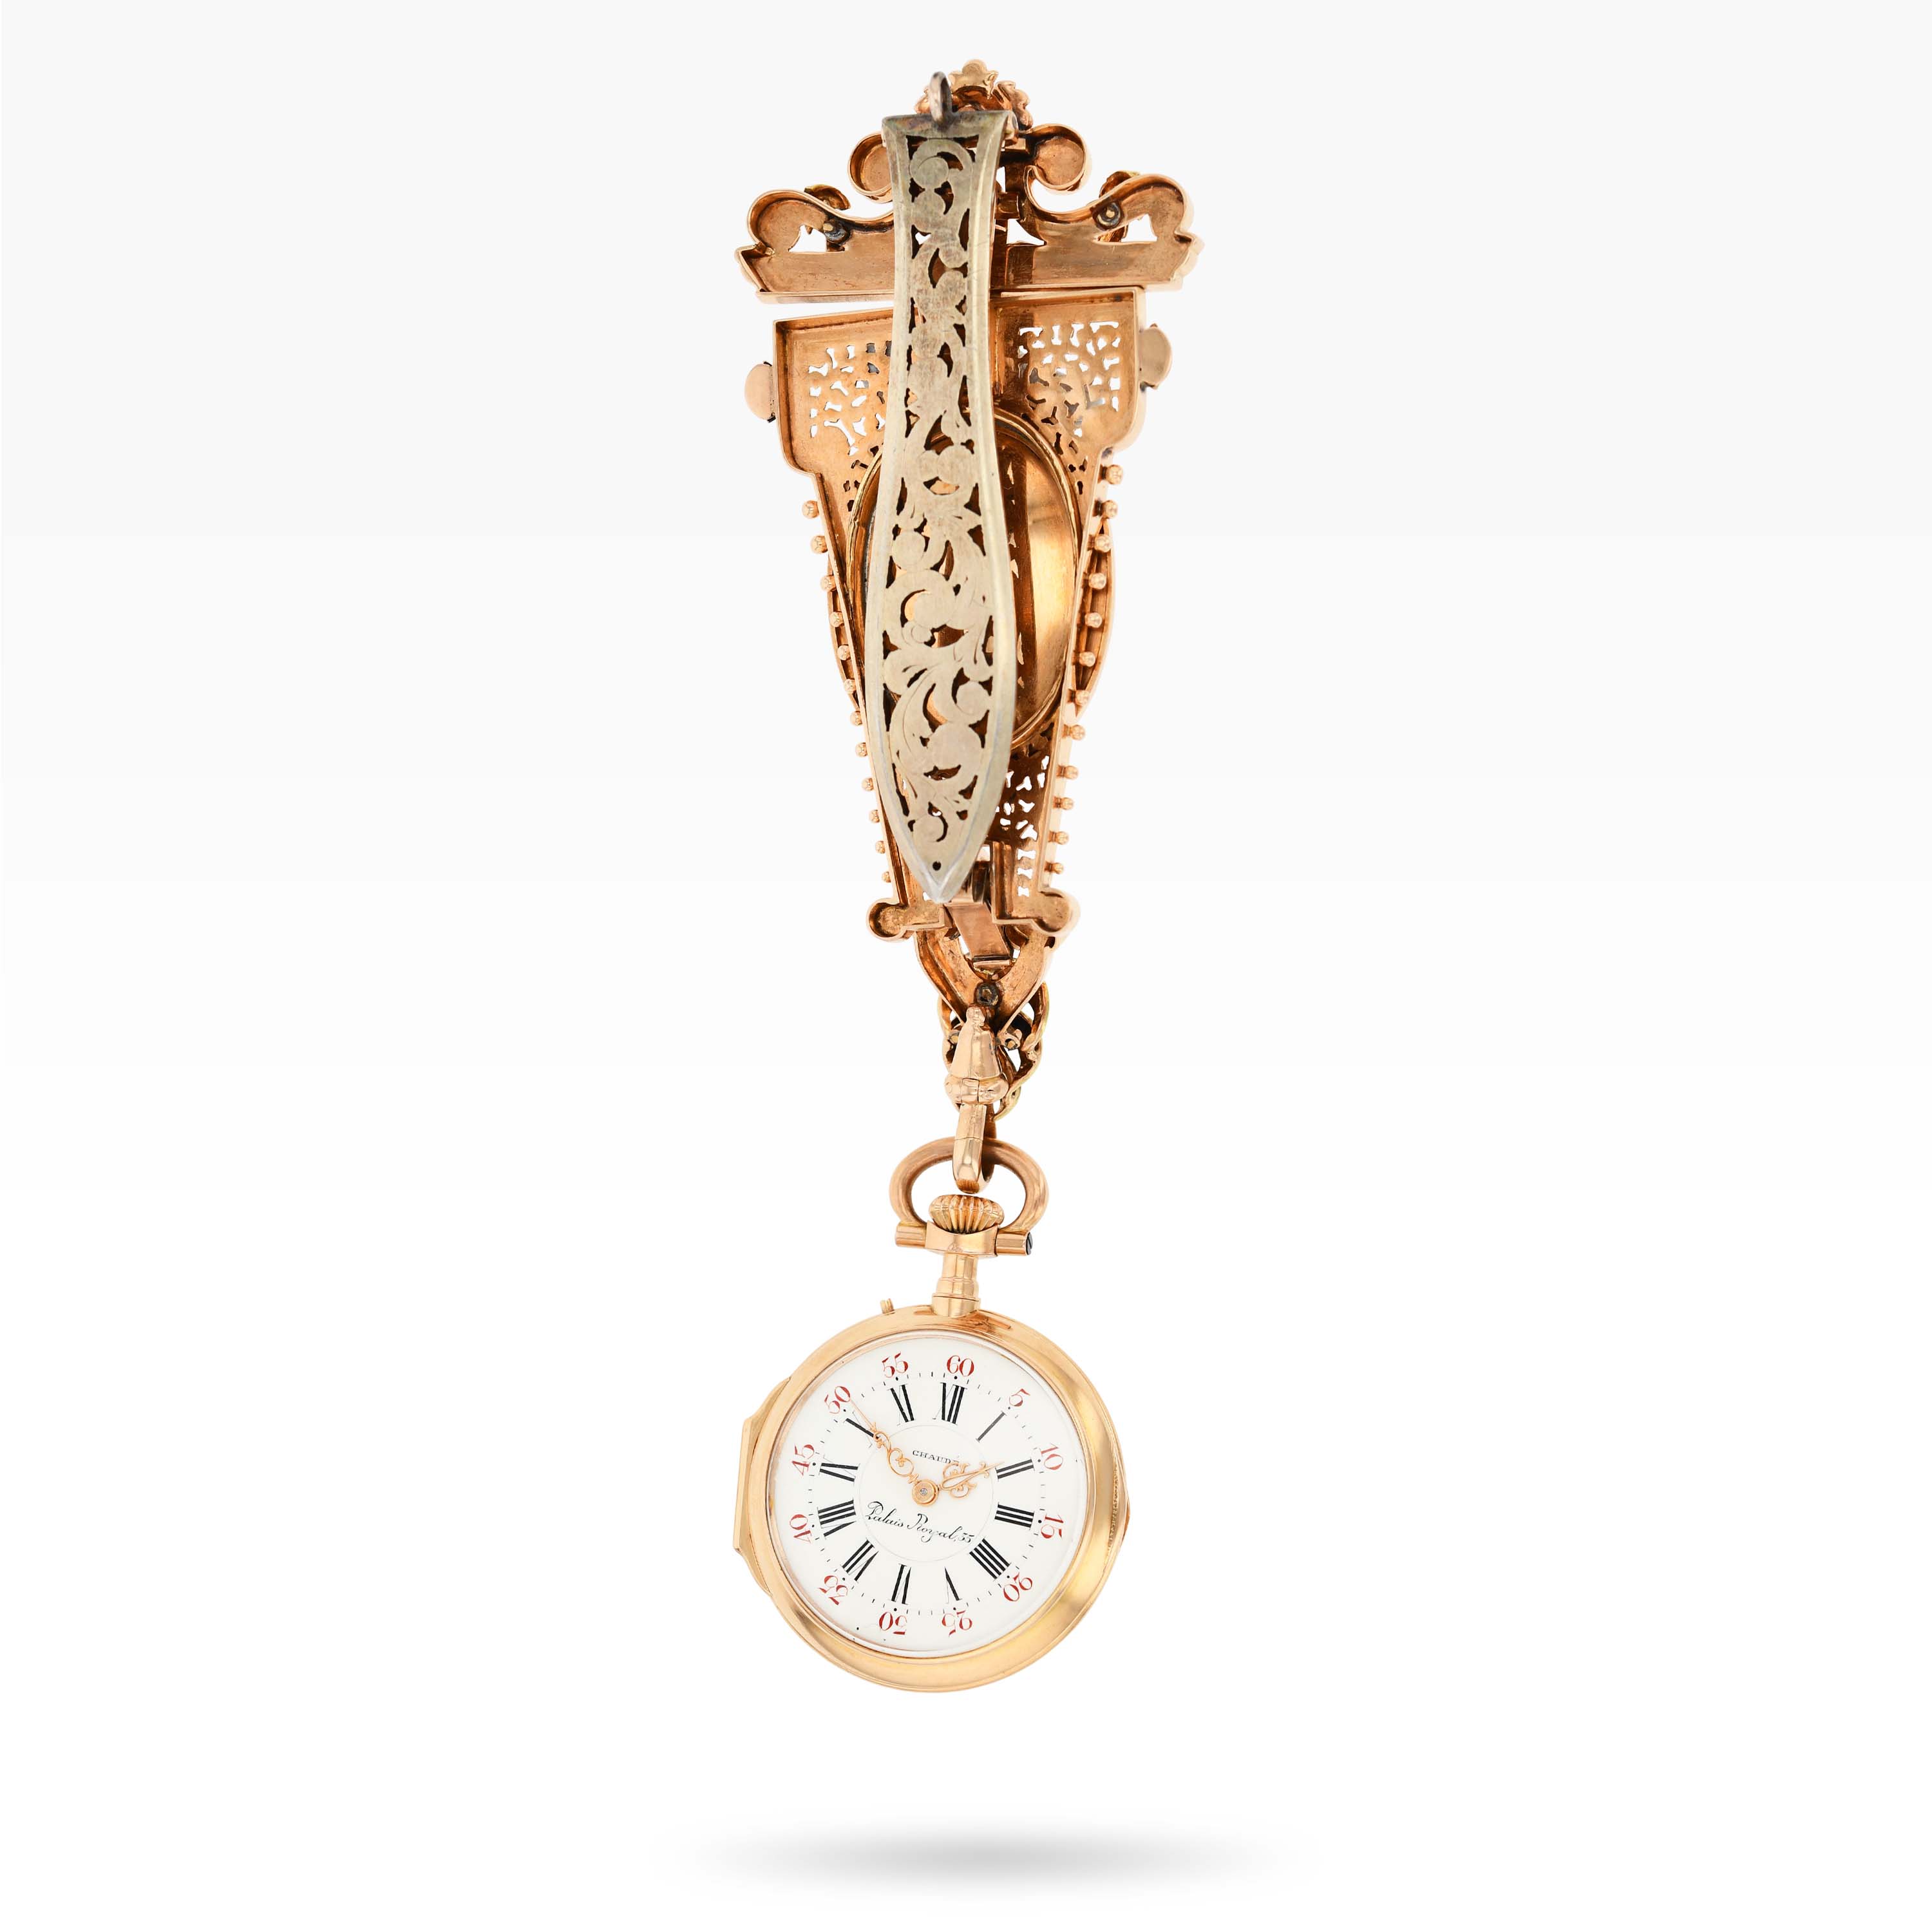 1279PW1 Chaudé Paris Pink Gold and Vari-Colour gold Pendant Watch from circa 1870 img-main2